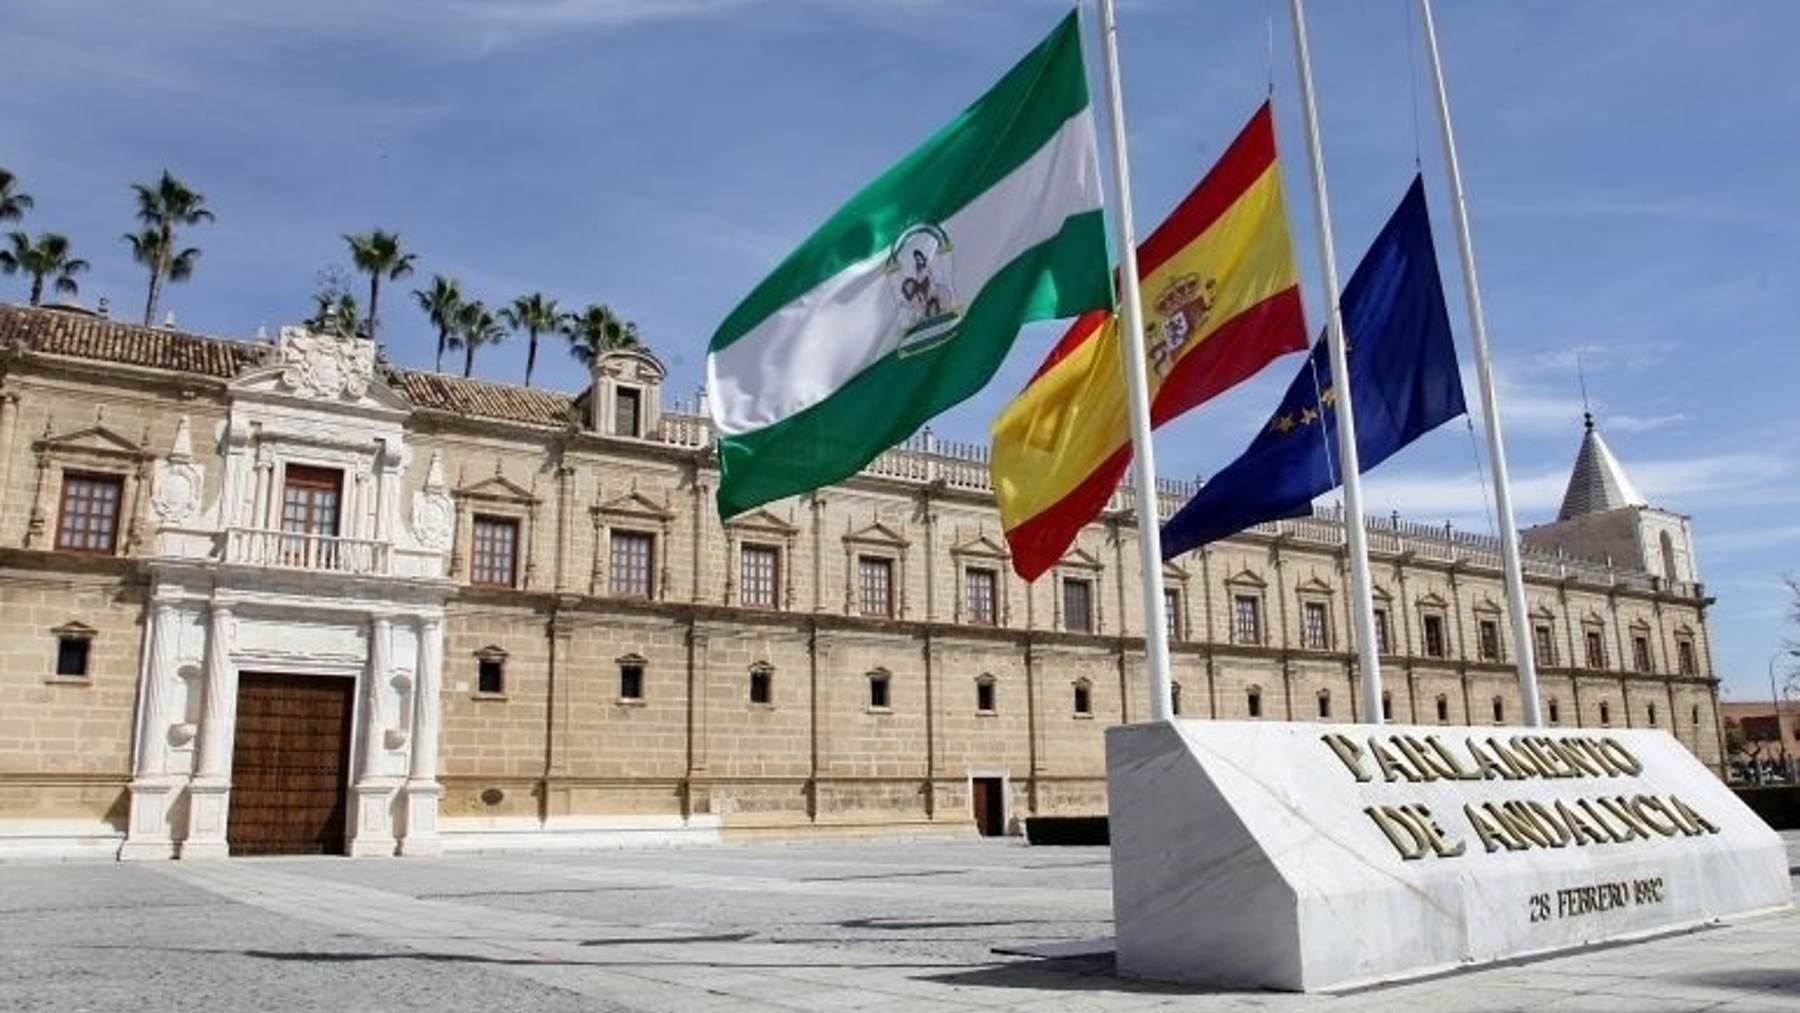 El salón de usos múltiples del Parlamento de Andalucía llevará el nombre de Alberto Jiménez-Becerril.